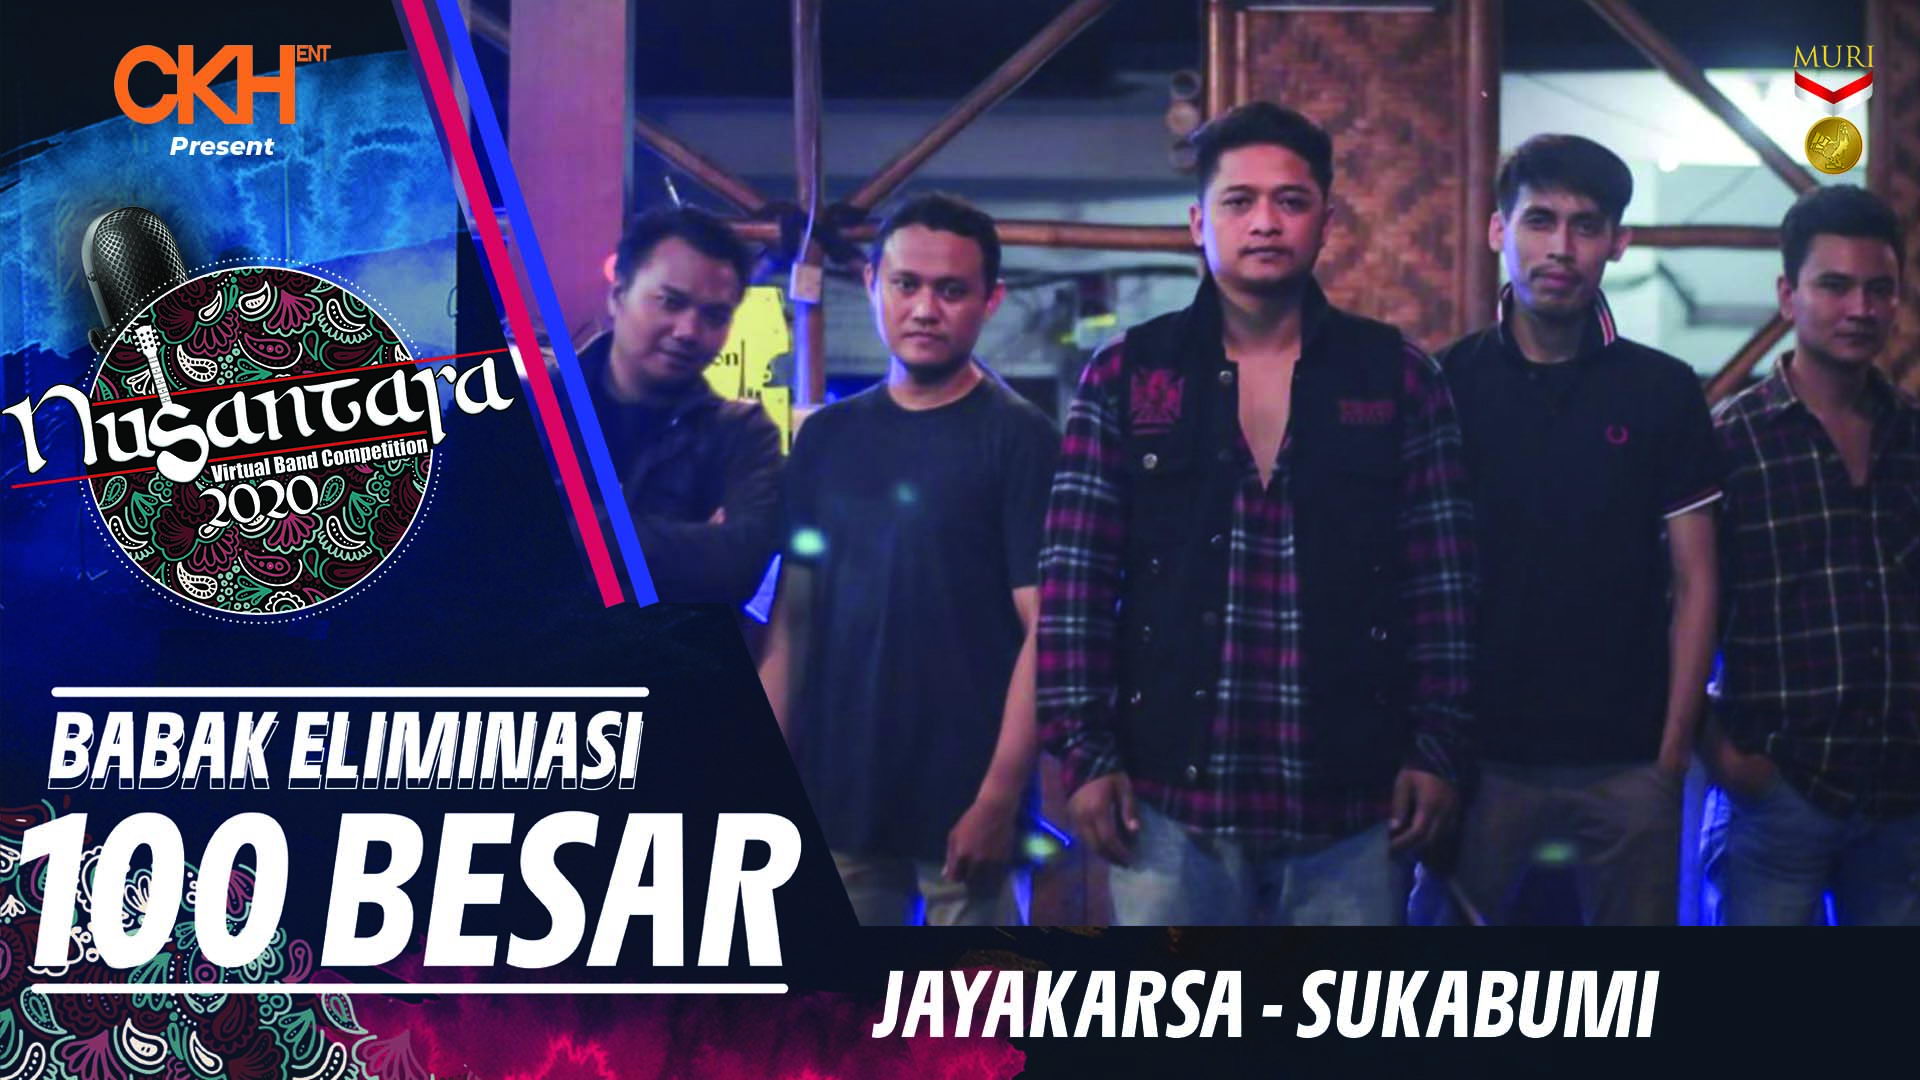 Jayakarsa - Eliminasi 100 Besar Nusantara Virtual Band Competition